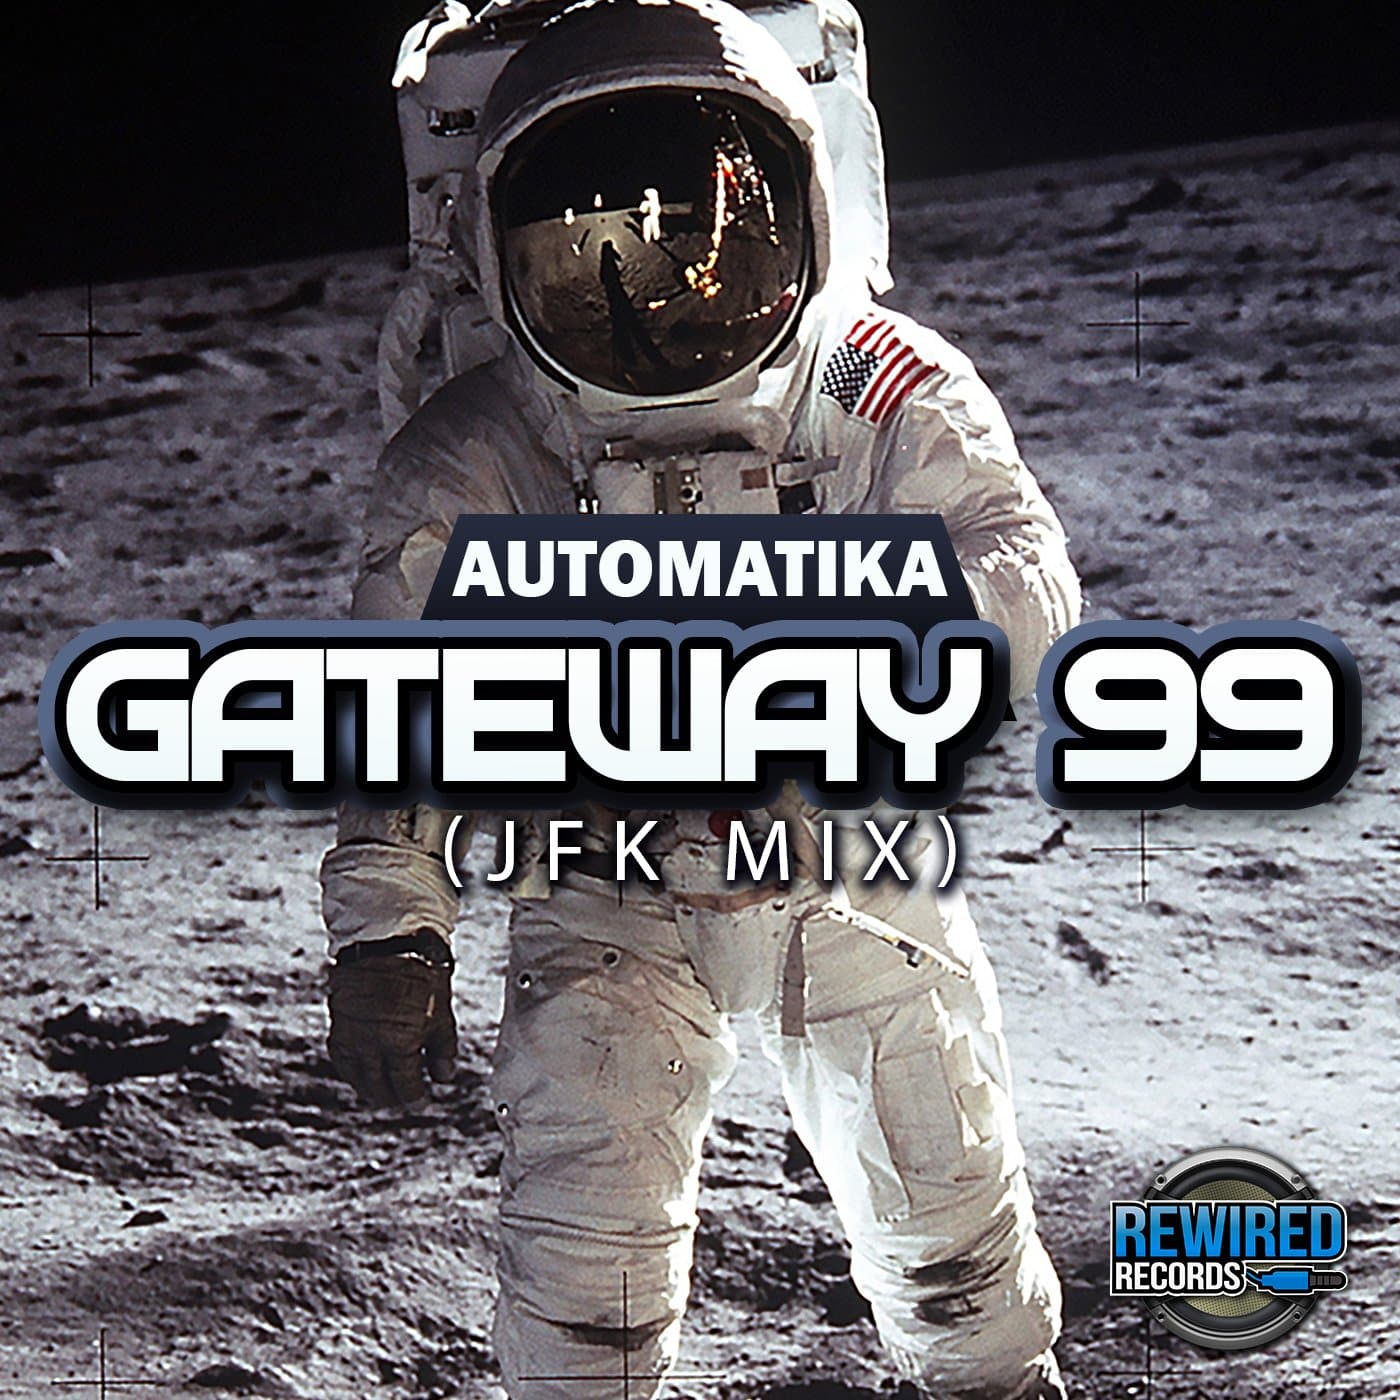 Automatika - Gateway 99 (JFK Mix) - Rewired Records